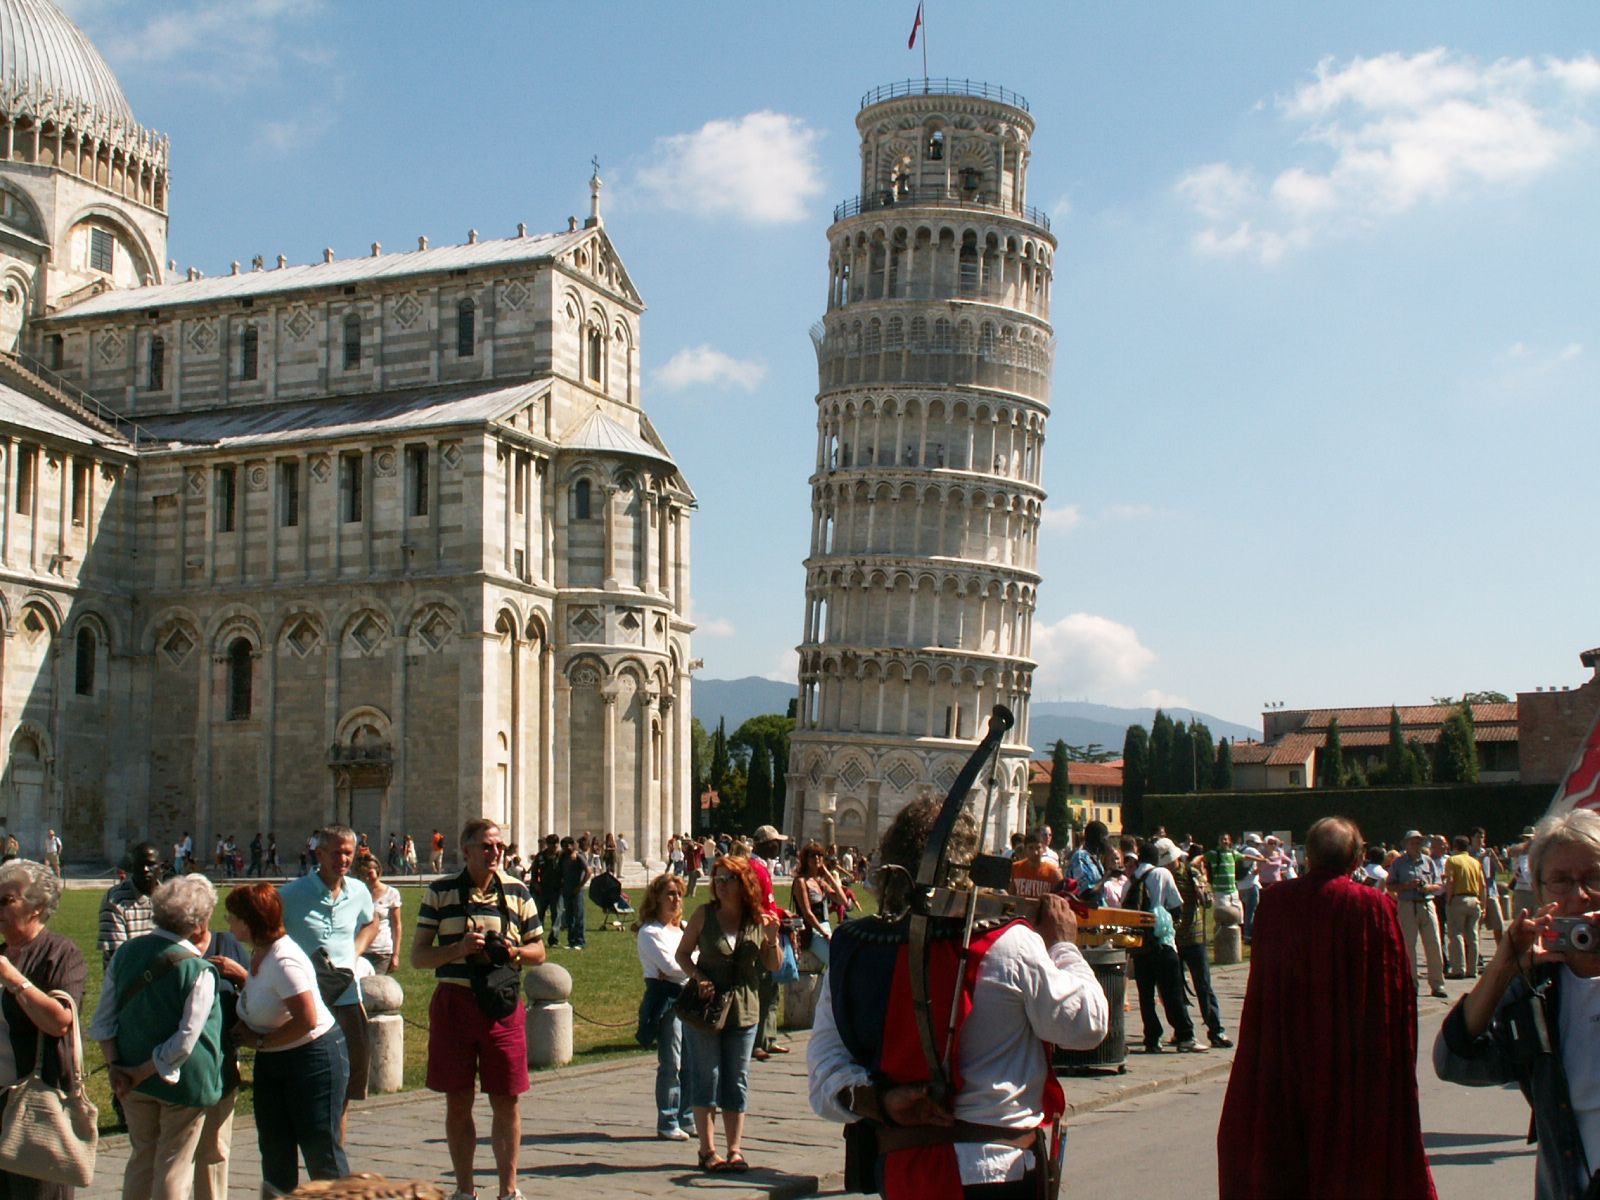 Leaning Tower of Pisa - Europe Wallpaper (622240) - Fanpop1600 x 1200